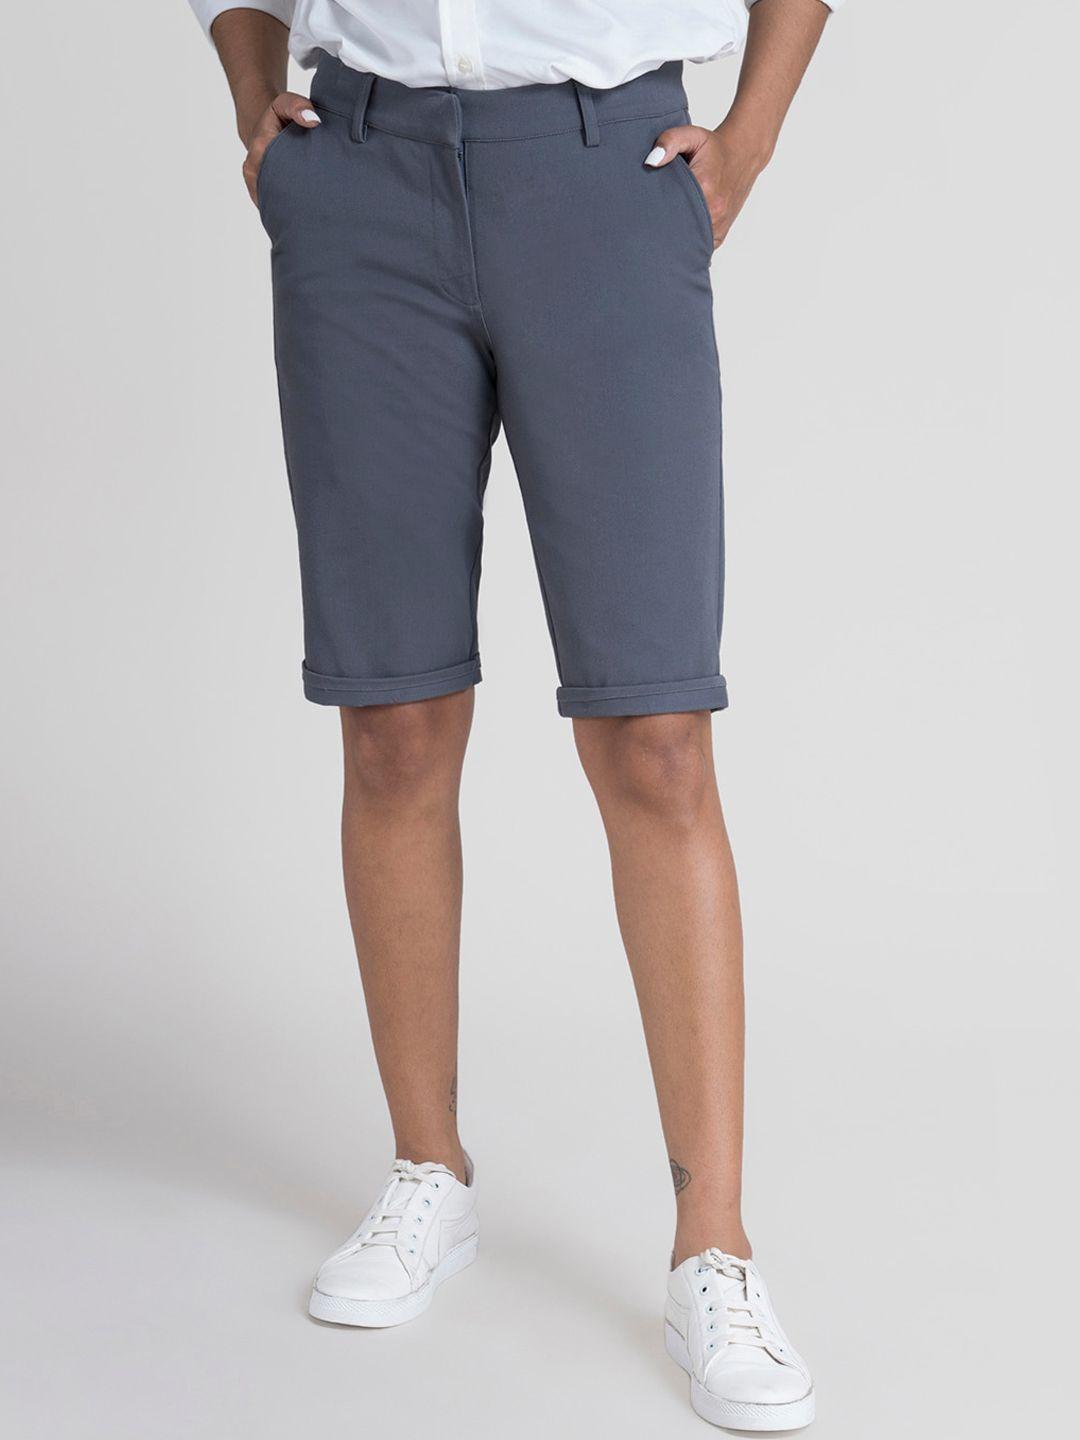 fablestreet women grey mid-rise regular shorts